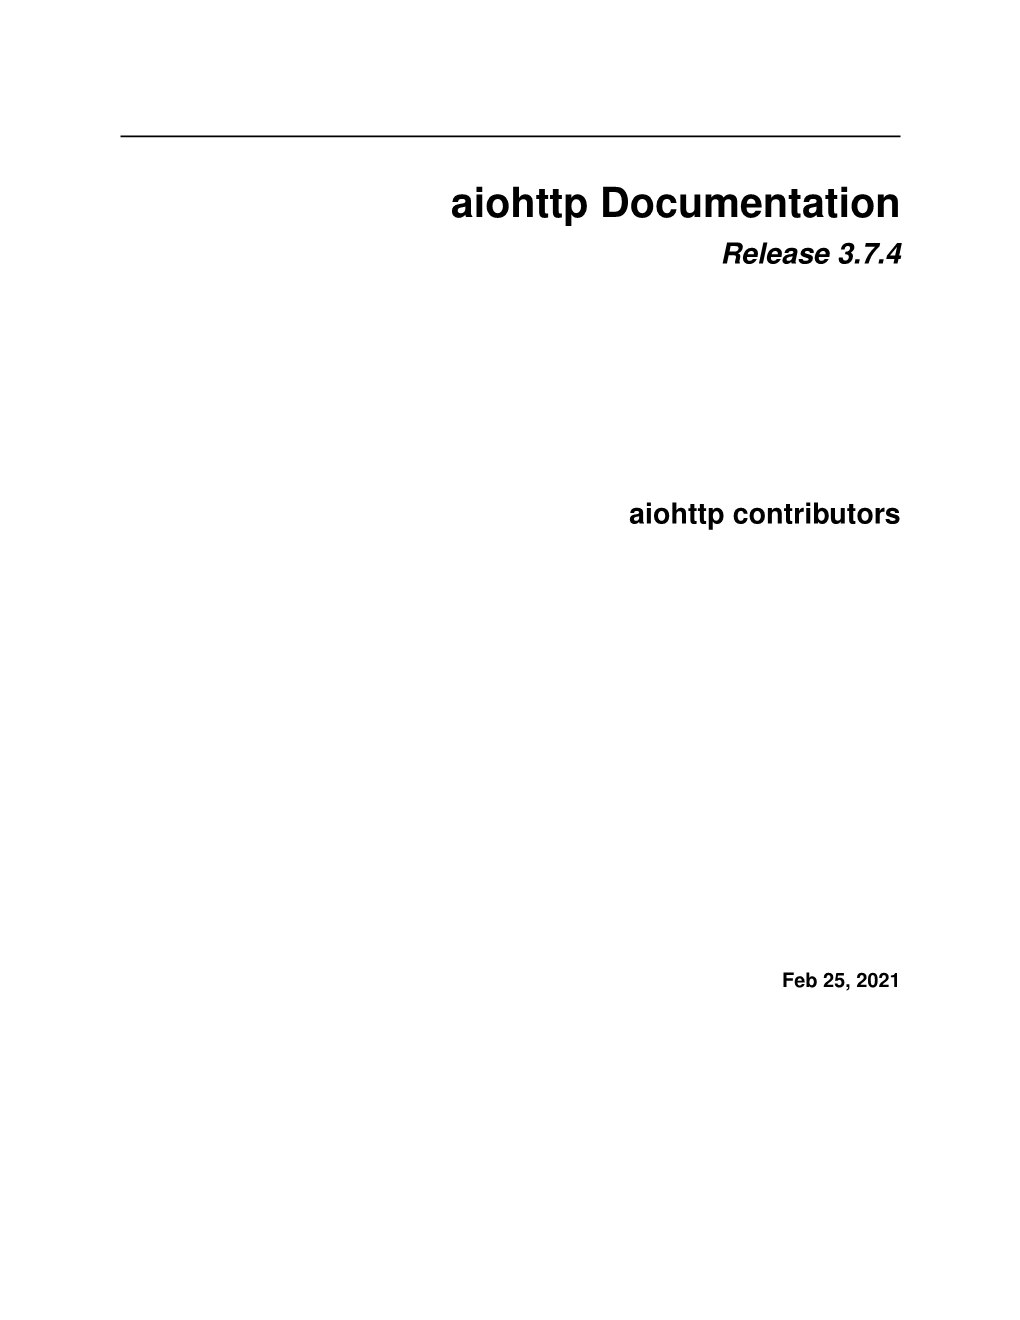 Aiohttp Documentation Release 3.7.4